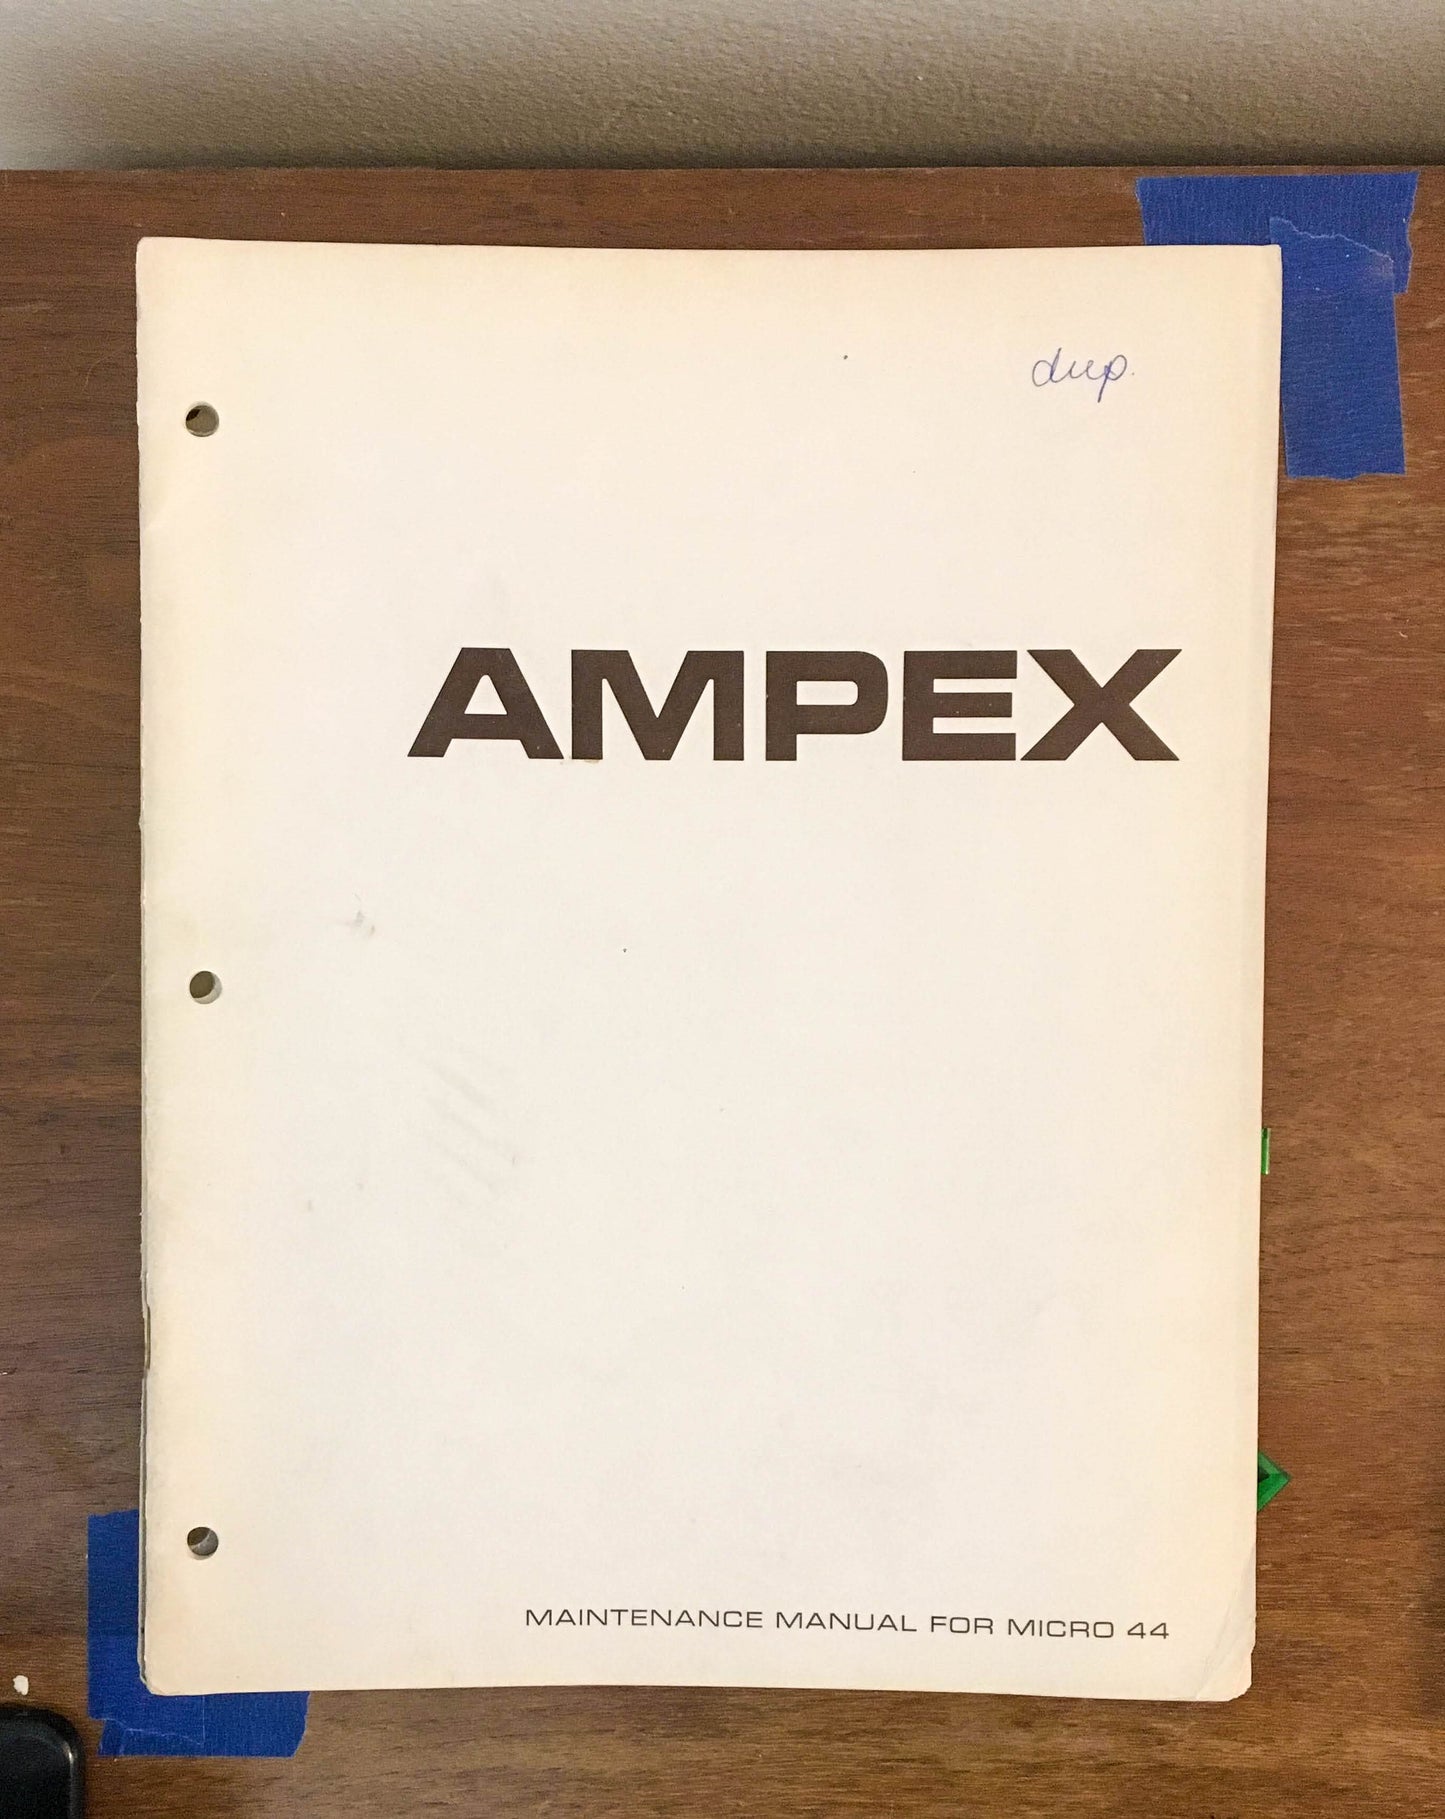 Ampex Micro 44 Tape Recorder / Player Service Manual *Original*